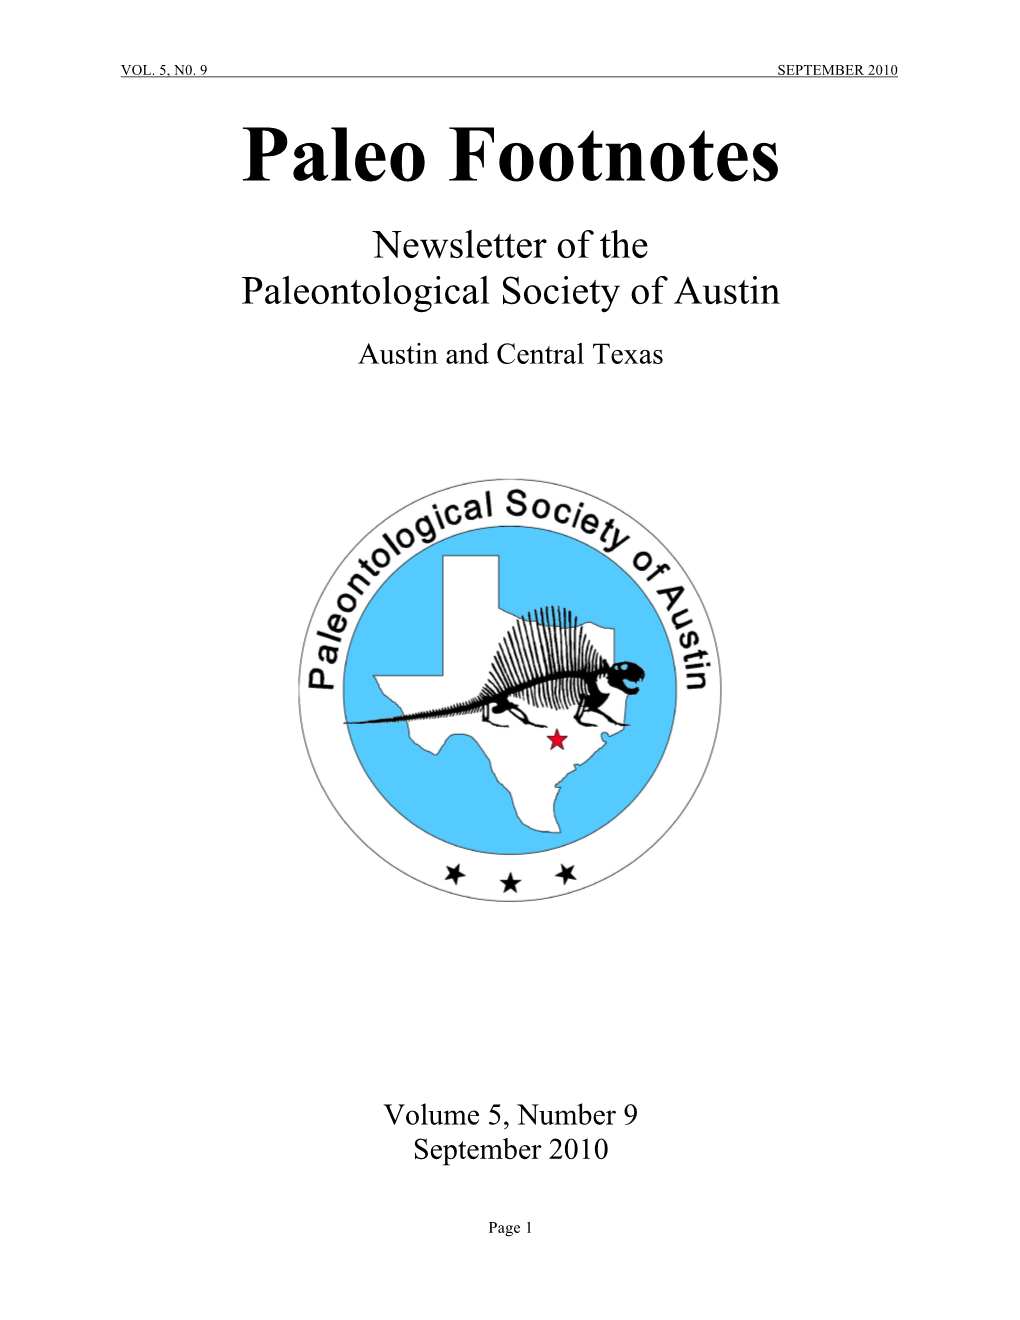 Paleo Footnotes Sept 10